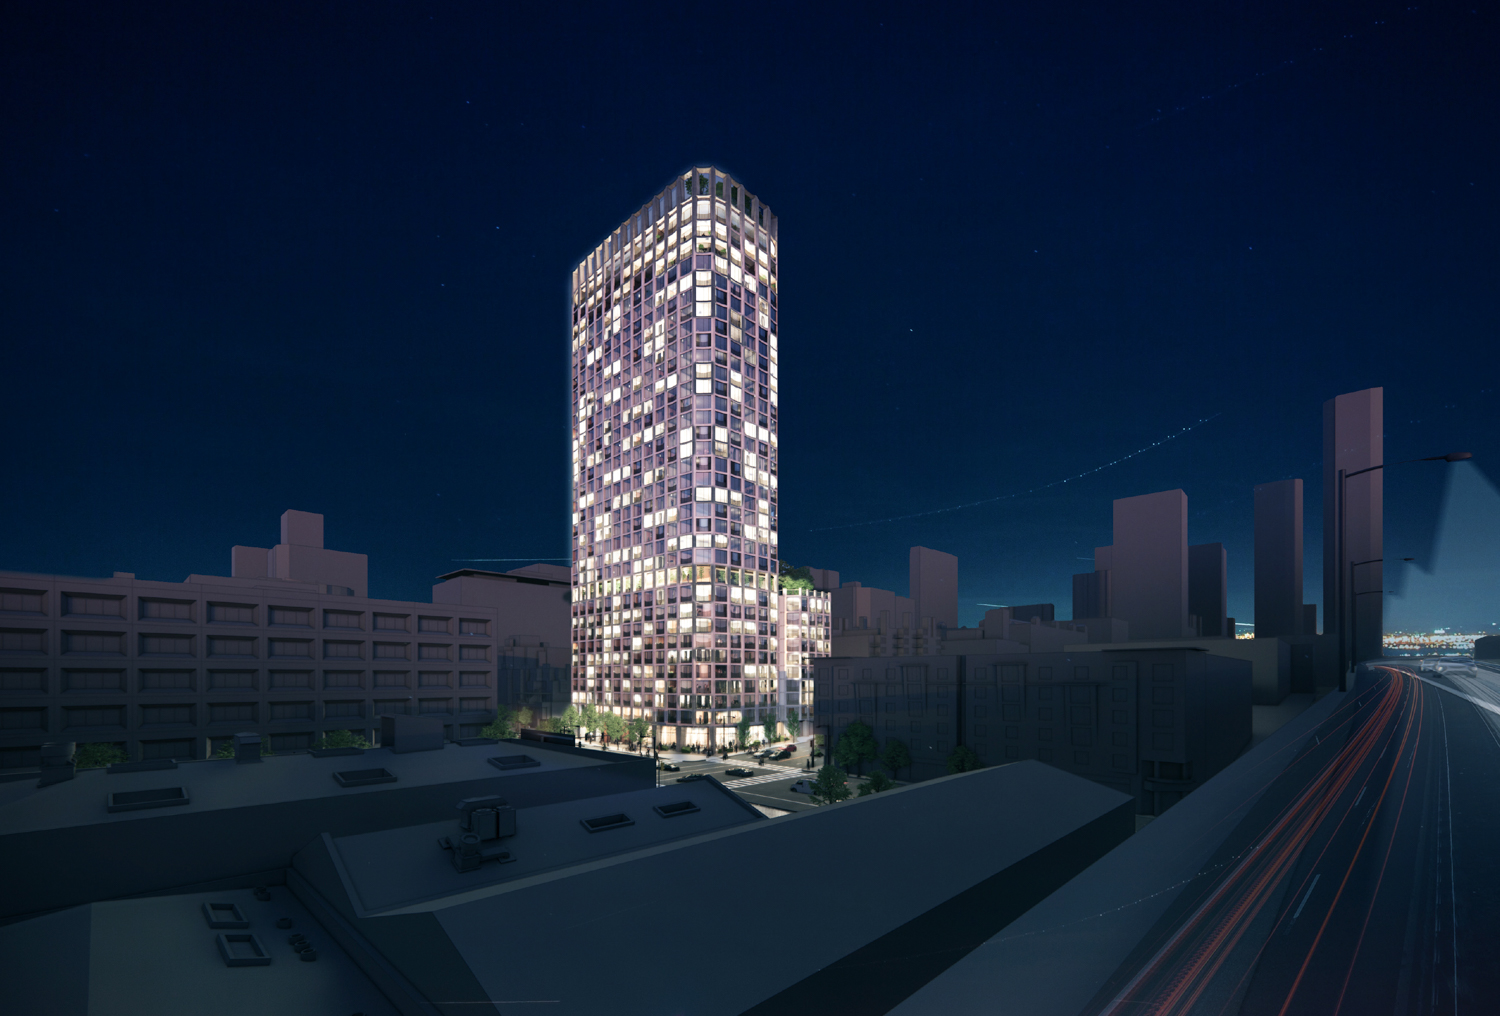 395 3rd Street nighttime view, rendering by Henning Larsen